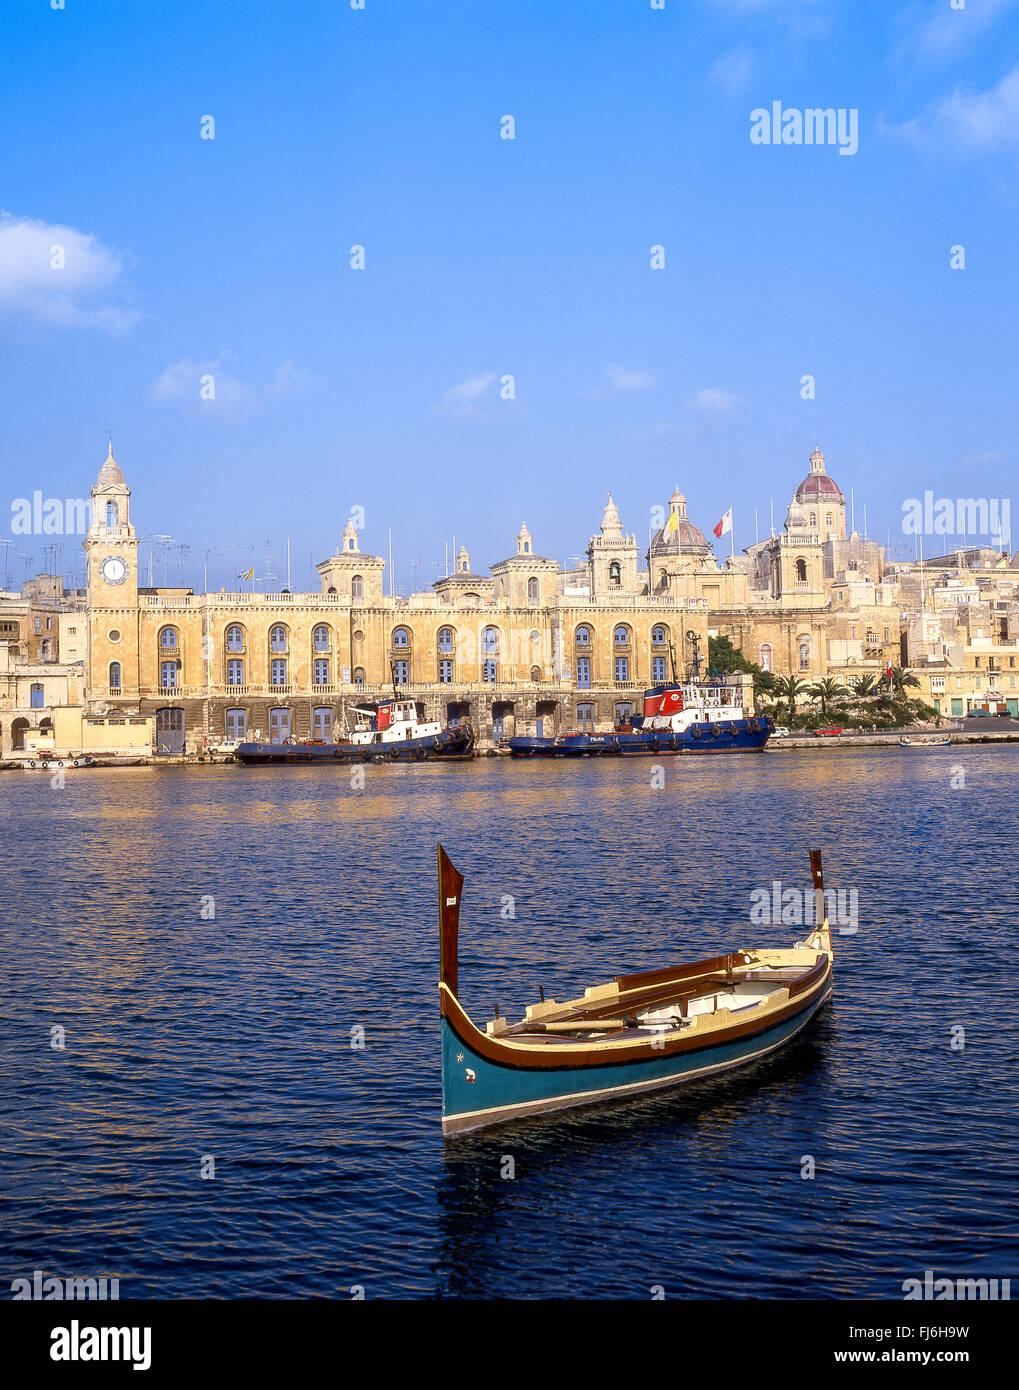 Luzzu boat in harbour, Valletta (Il-Belt Valletta), Southern Harbour District, Malta Xlokk Region, Republic of Malta Stock Photo